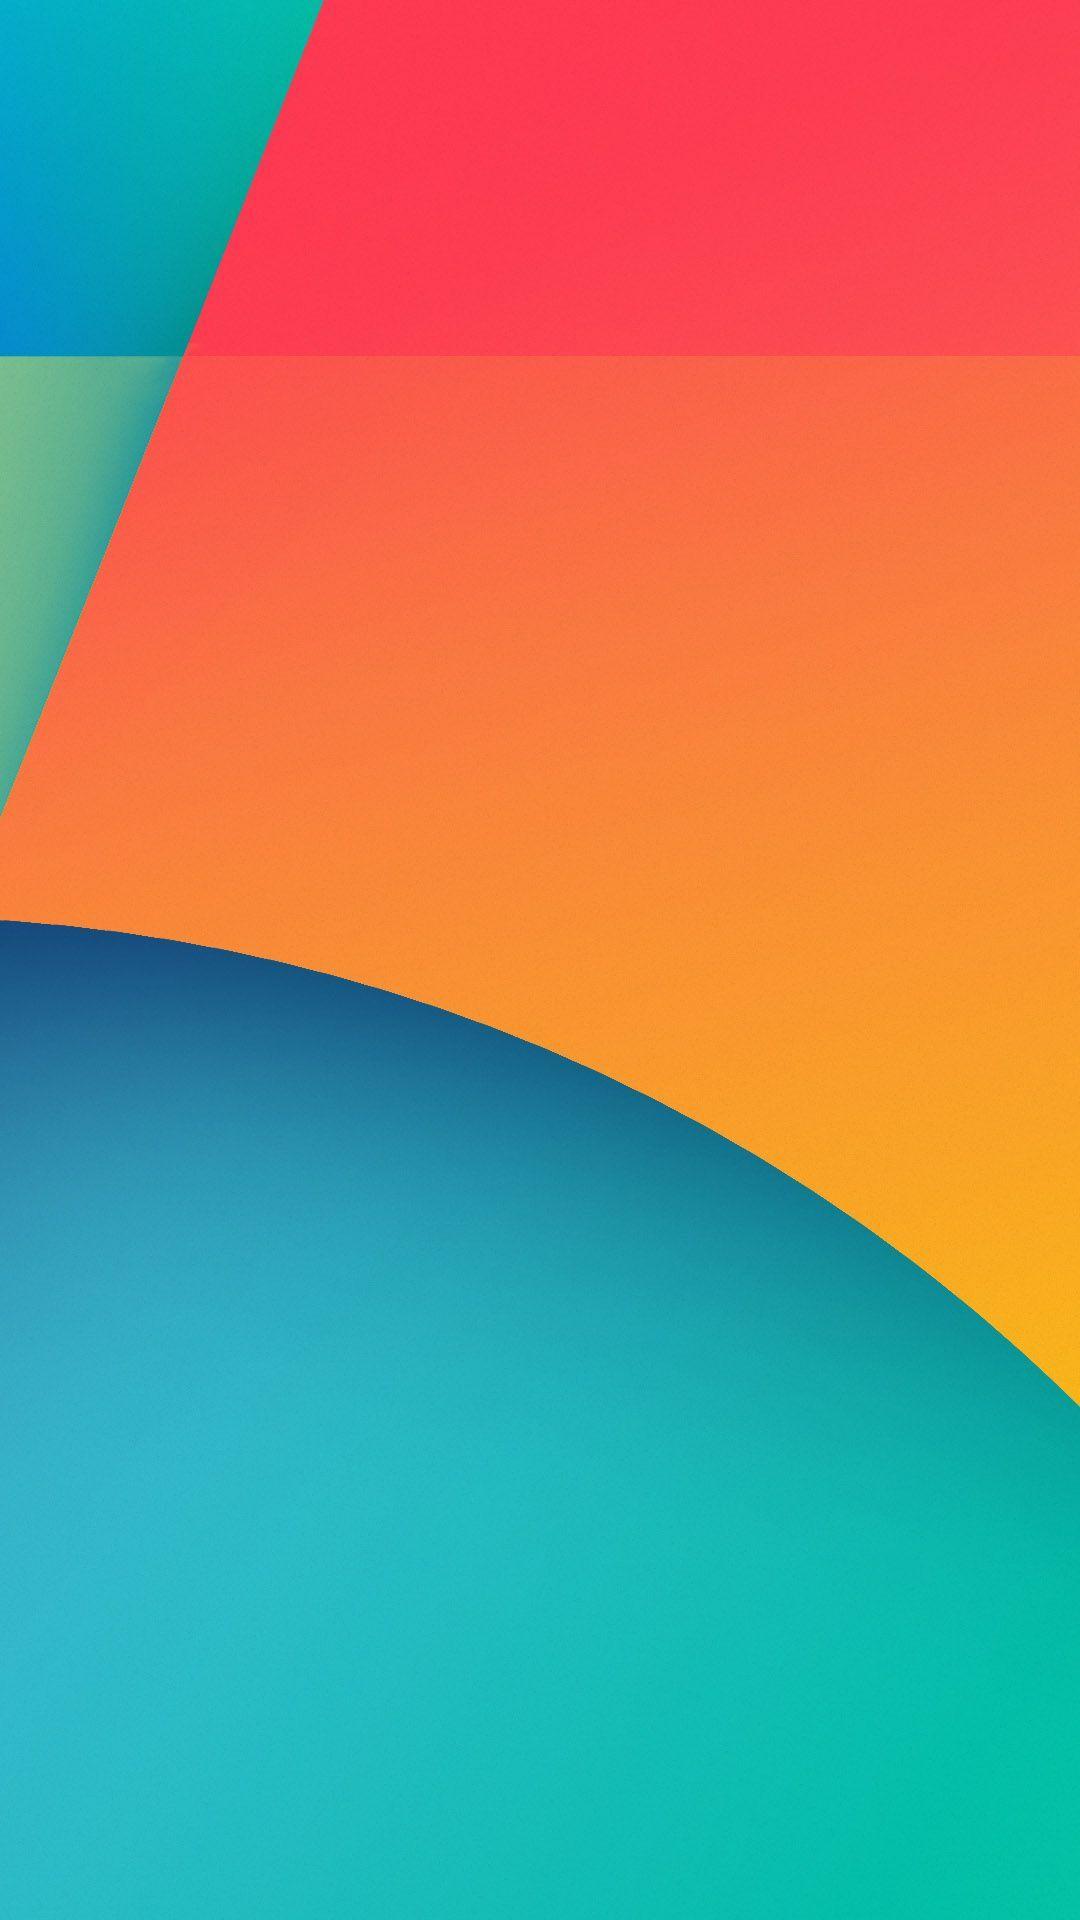 Nexus 5 Android 4.4 KitKat Orange Blue Android Wallpaper free